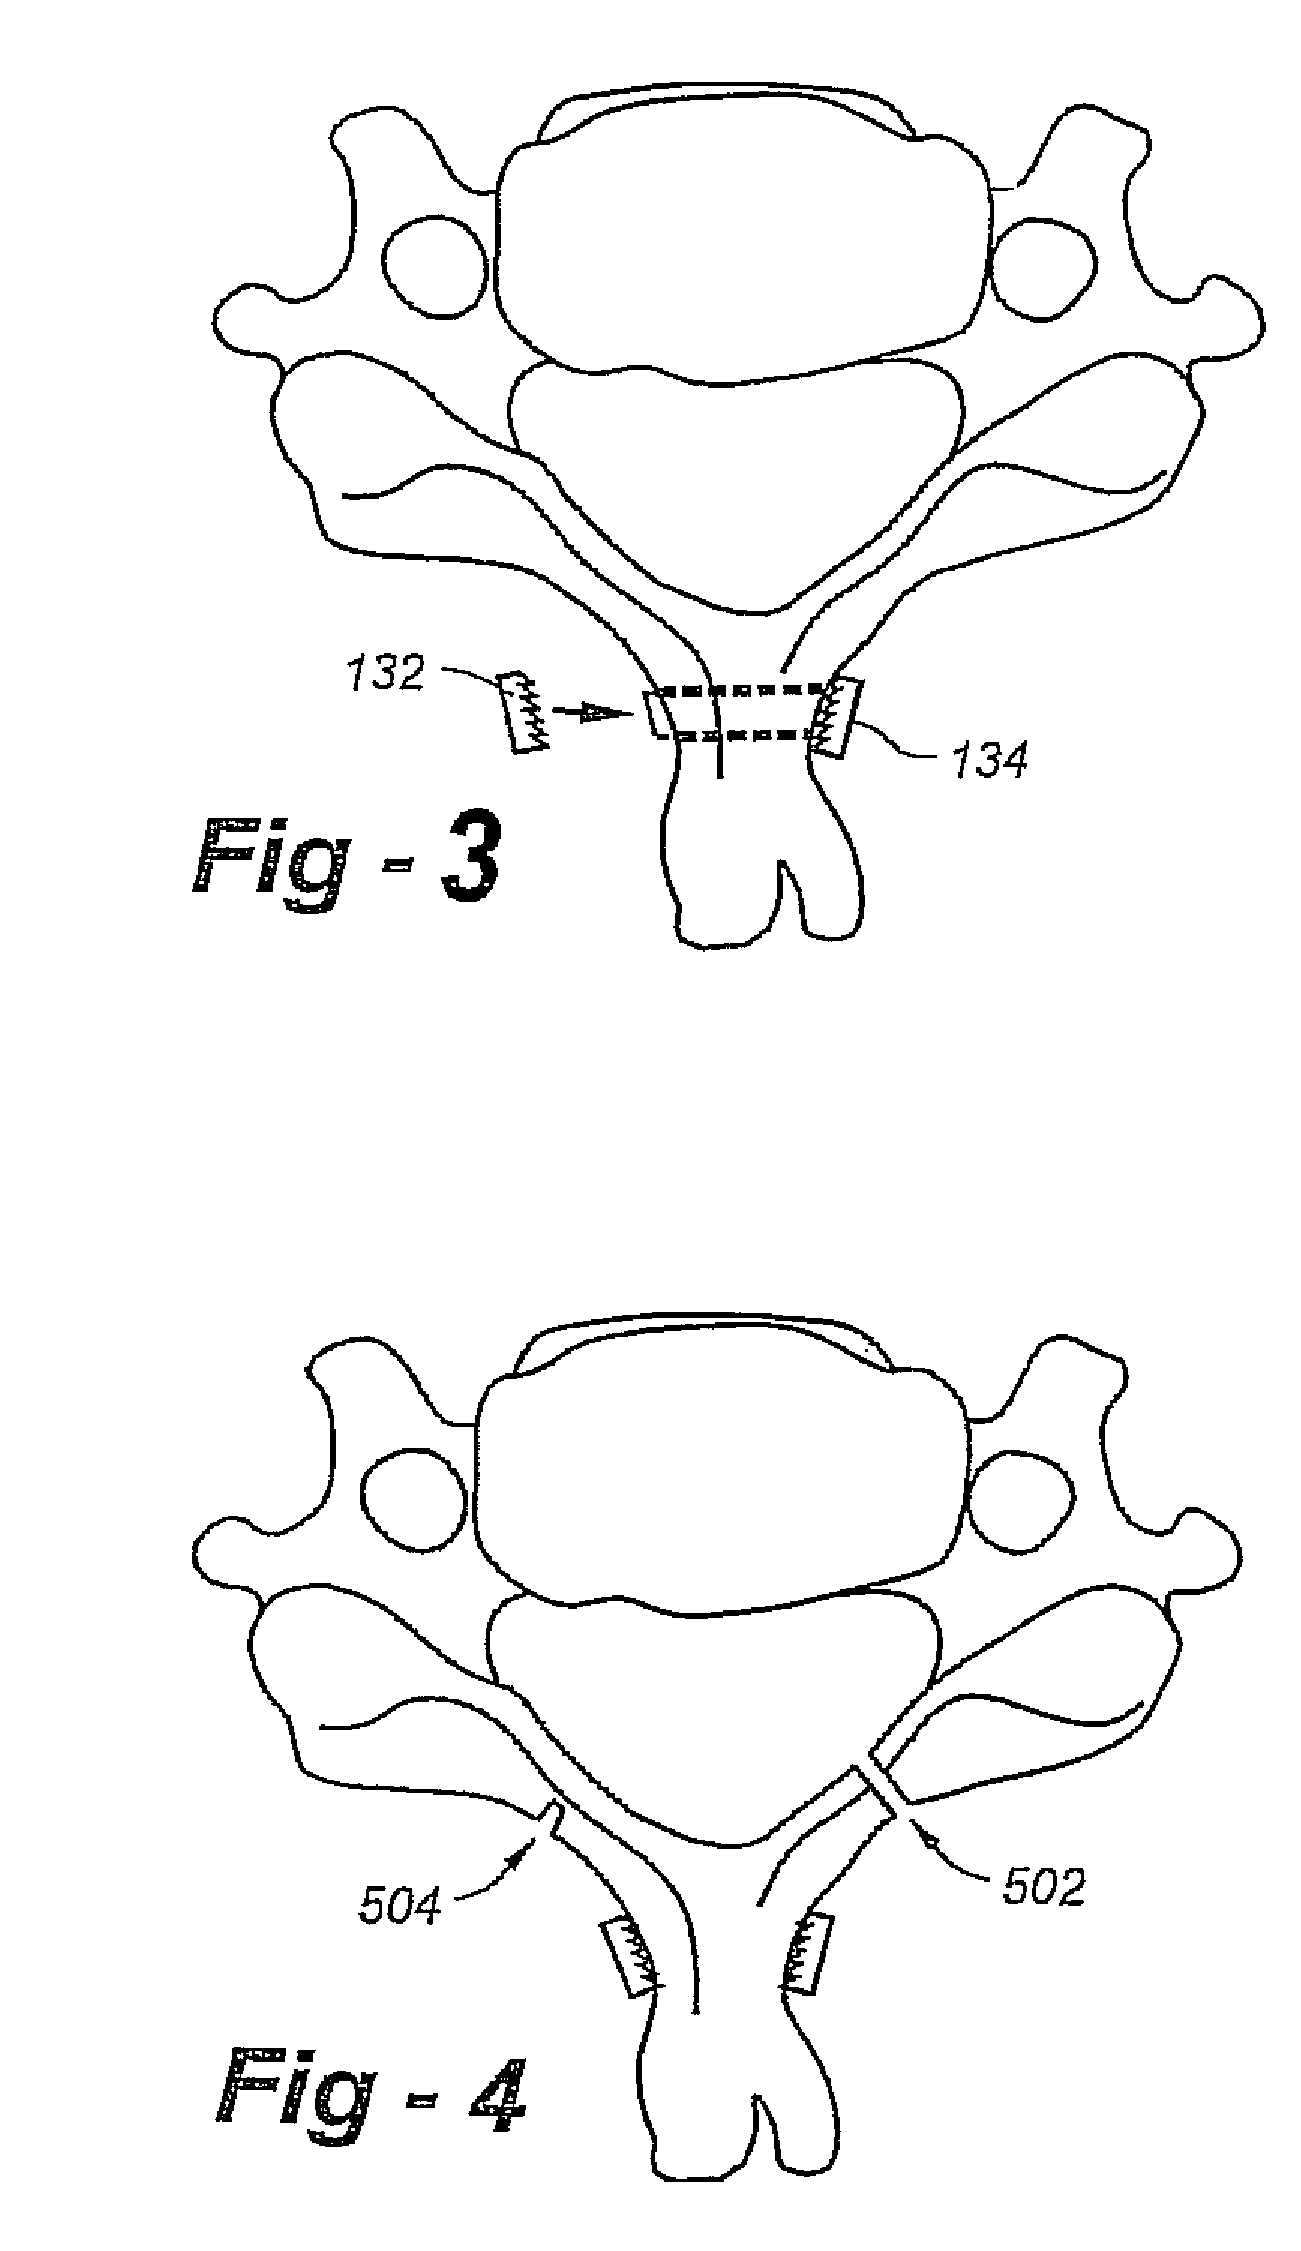 Laminoplasty apparatus and methods